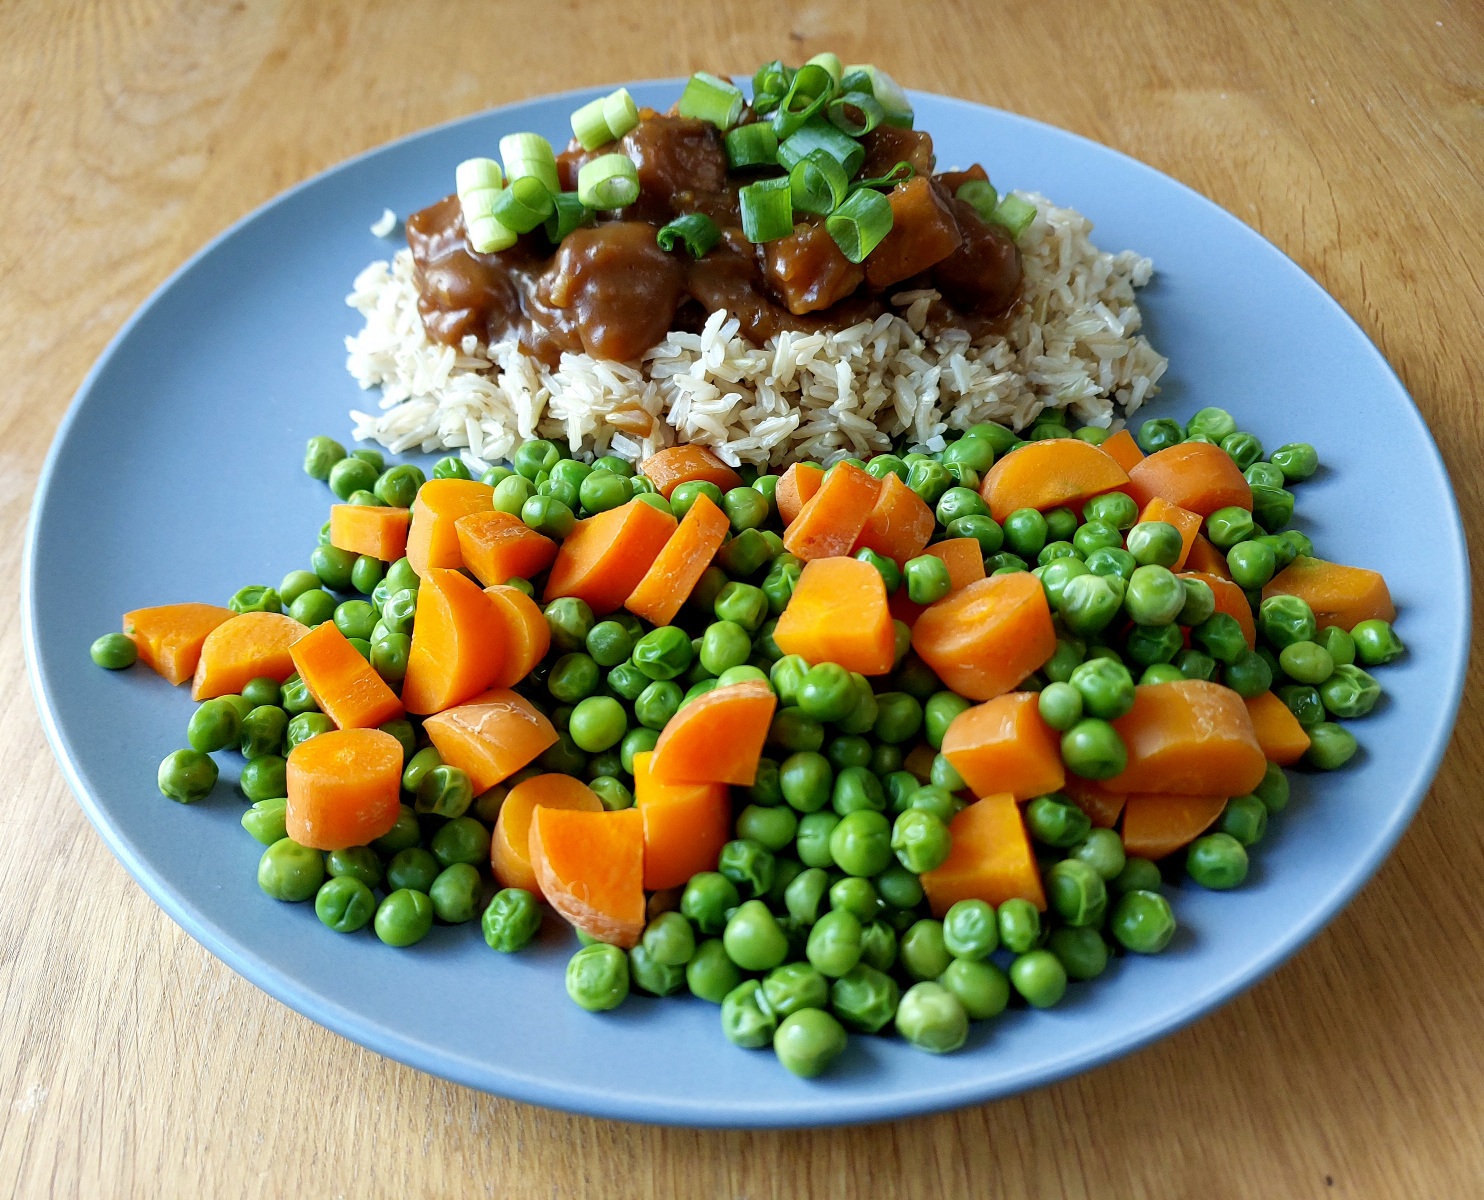 Vegan Orange Glazed Tofu served with brown basmati rice, peas and carrots